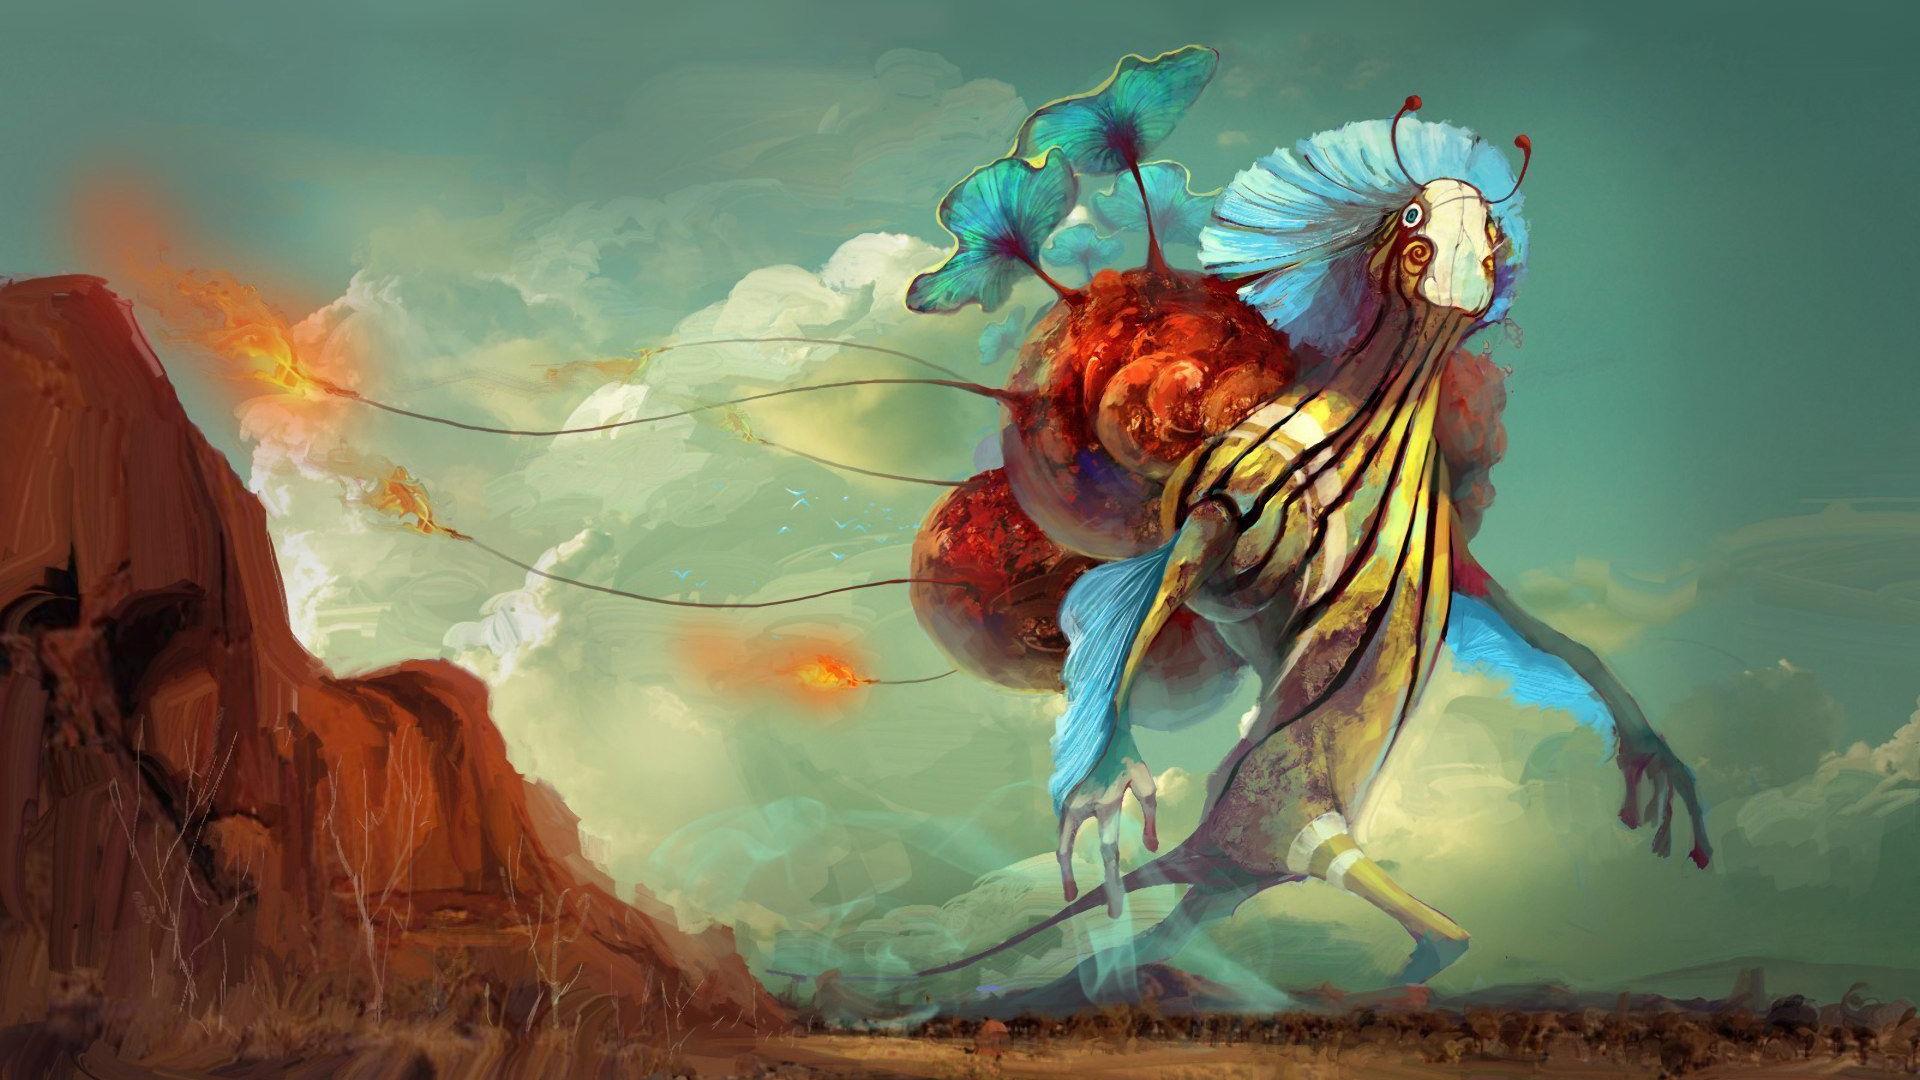 Digital Digital Art Creature Abstract Fantasy Art Artwork Colorful Giant Fireballs Landscape Clouds 1920x1080